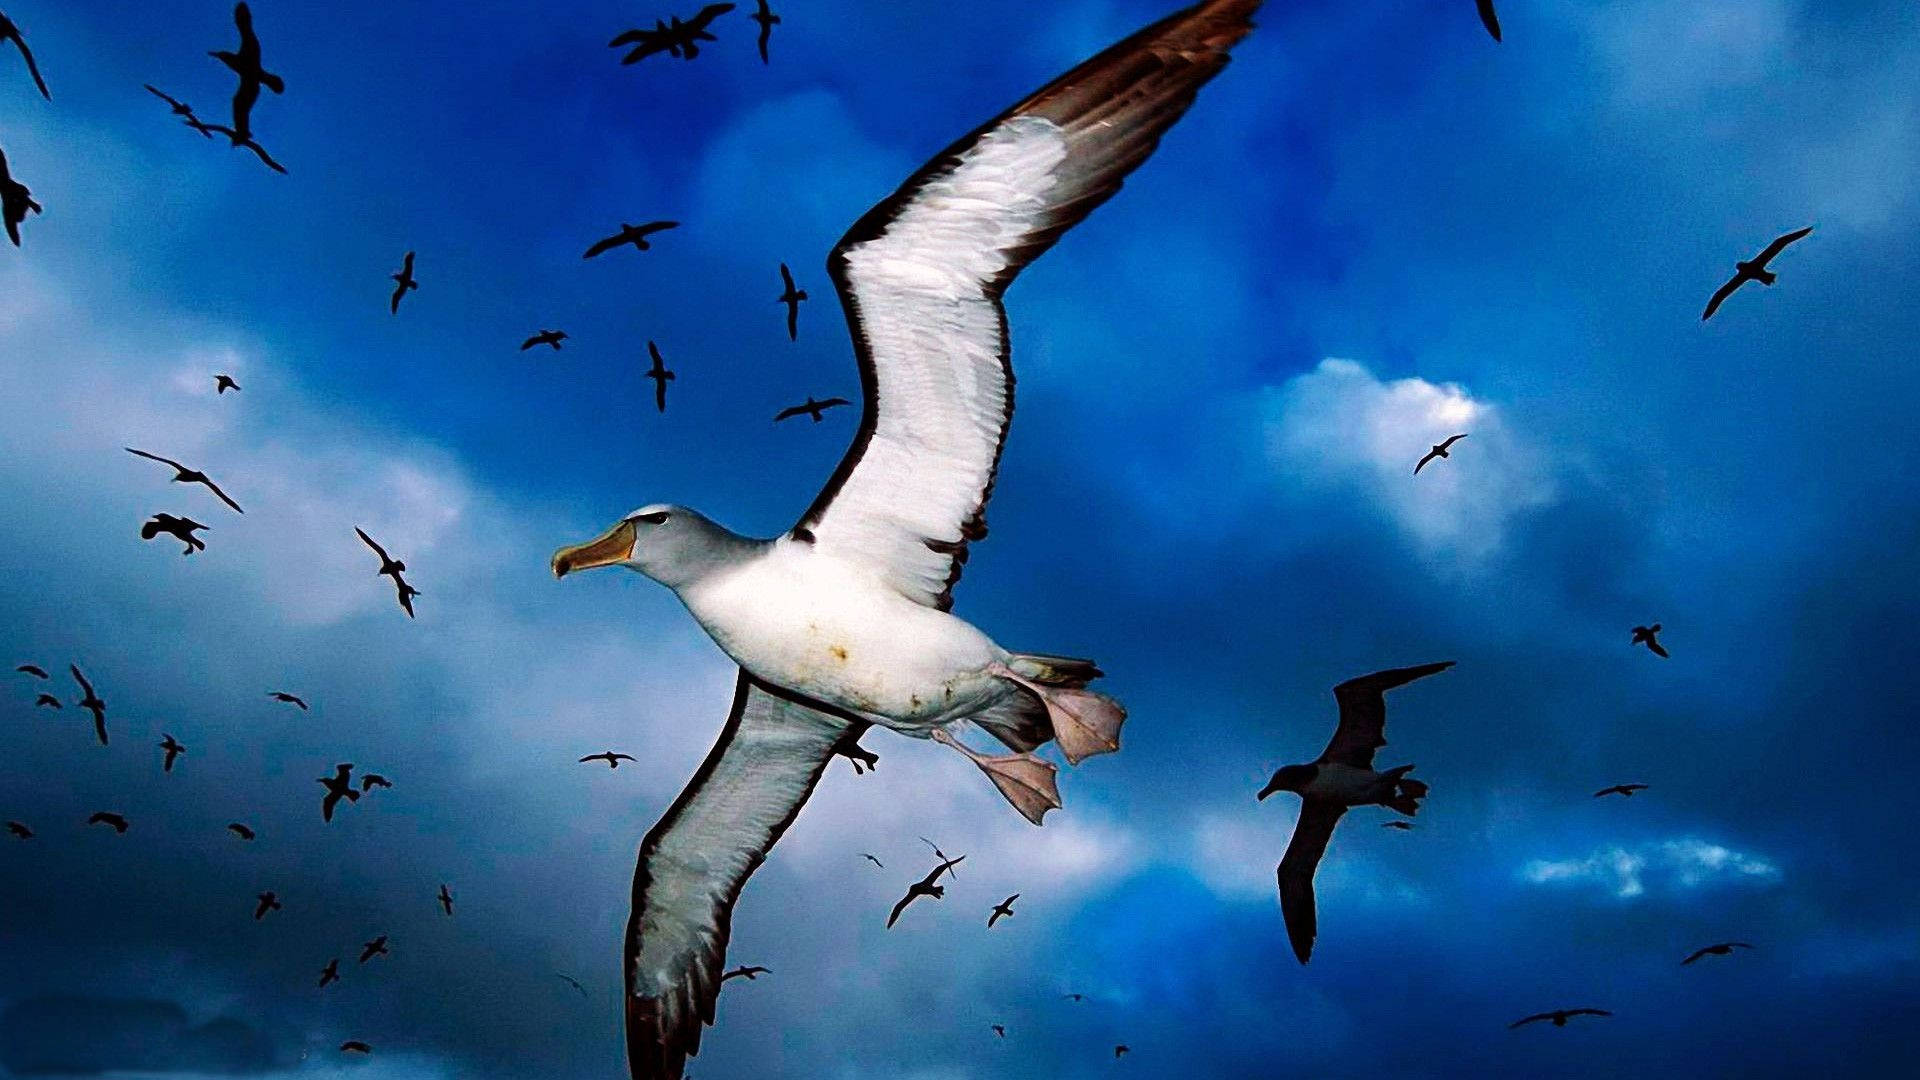 Albatross Birds Flying Over The Stormy Sky Wallpaper